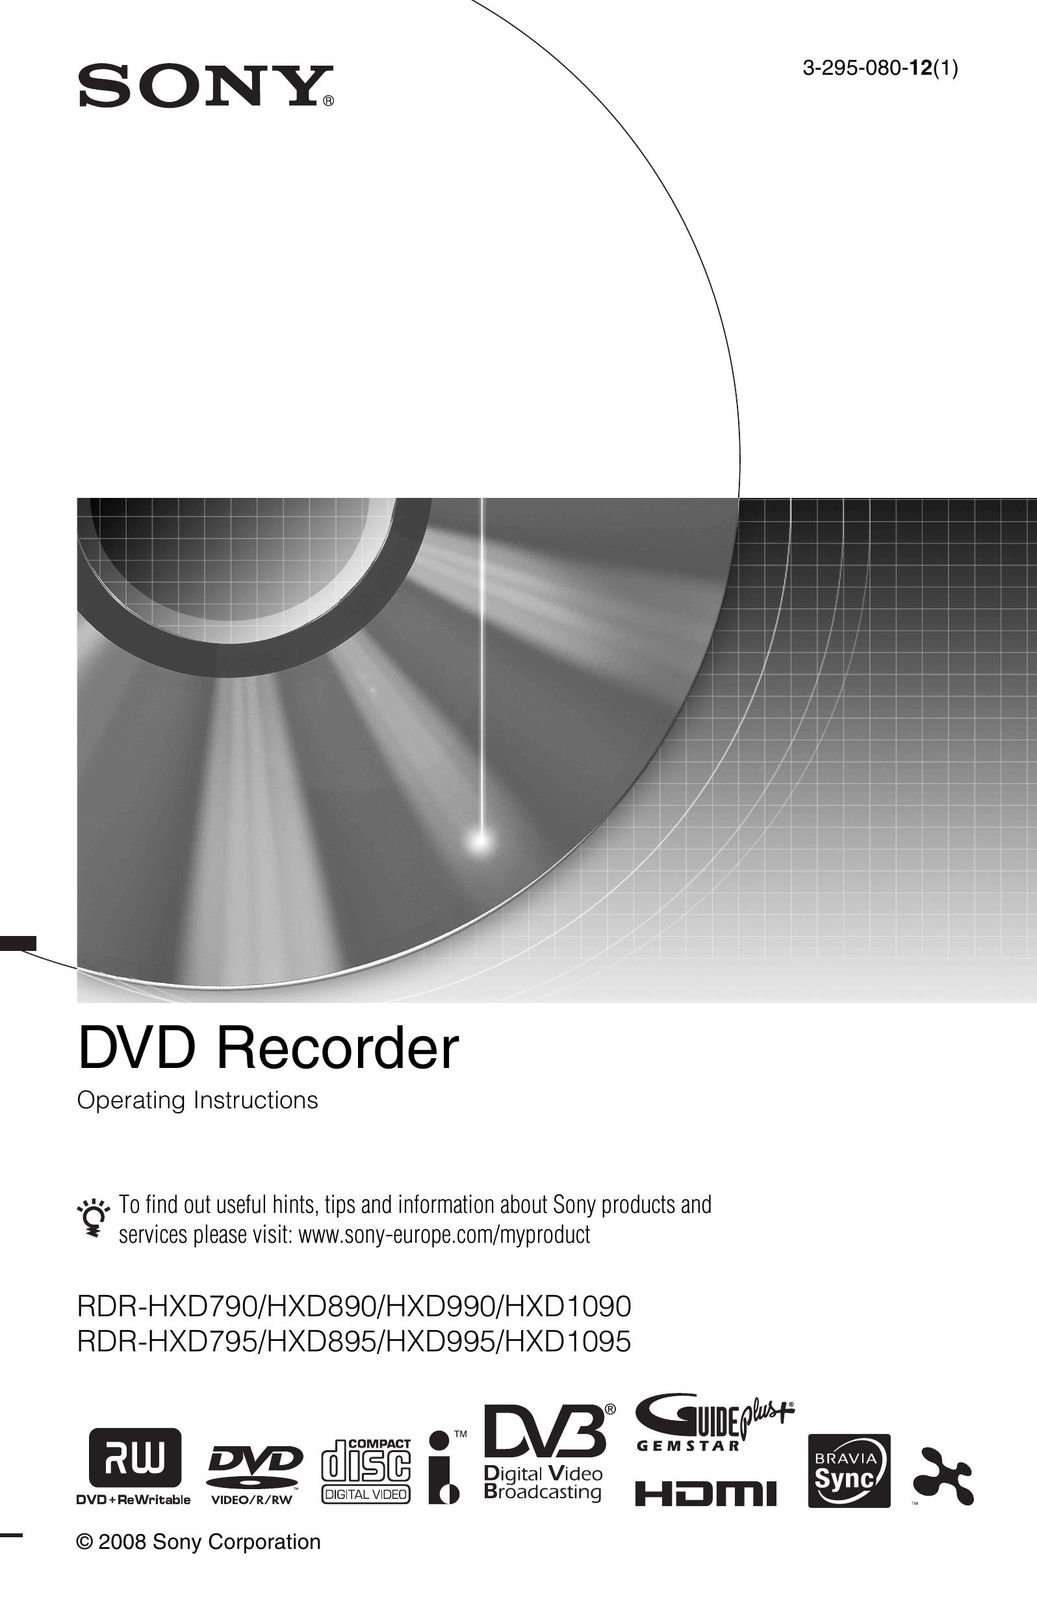 Sony 3-295-080-12(1) DVD Recorder User Manual